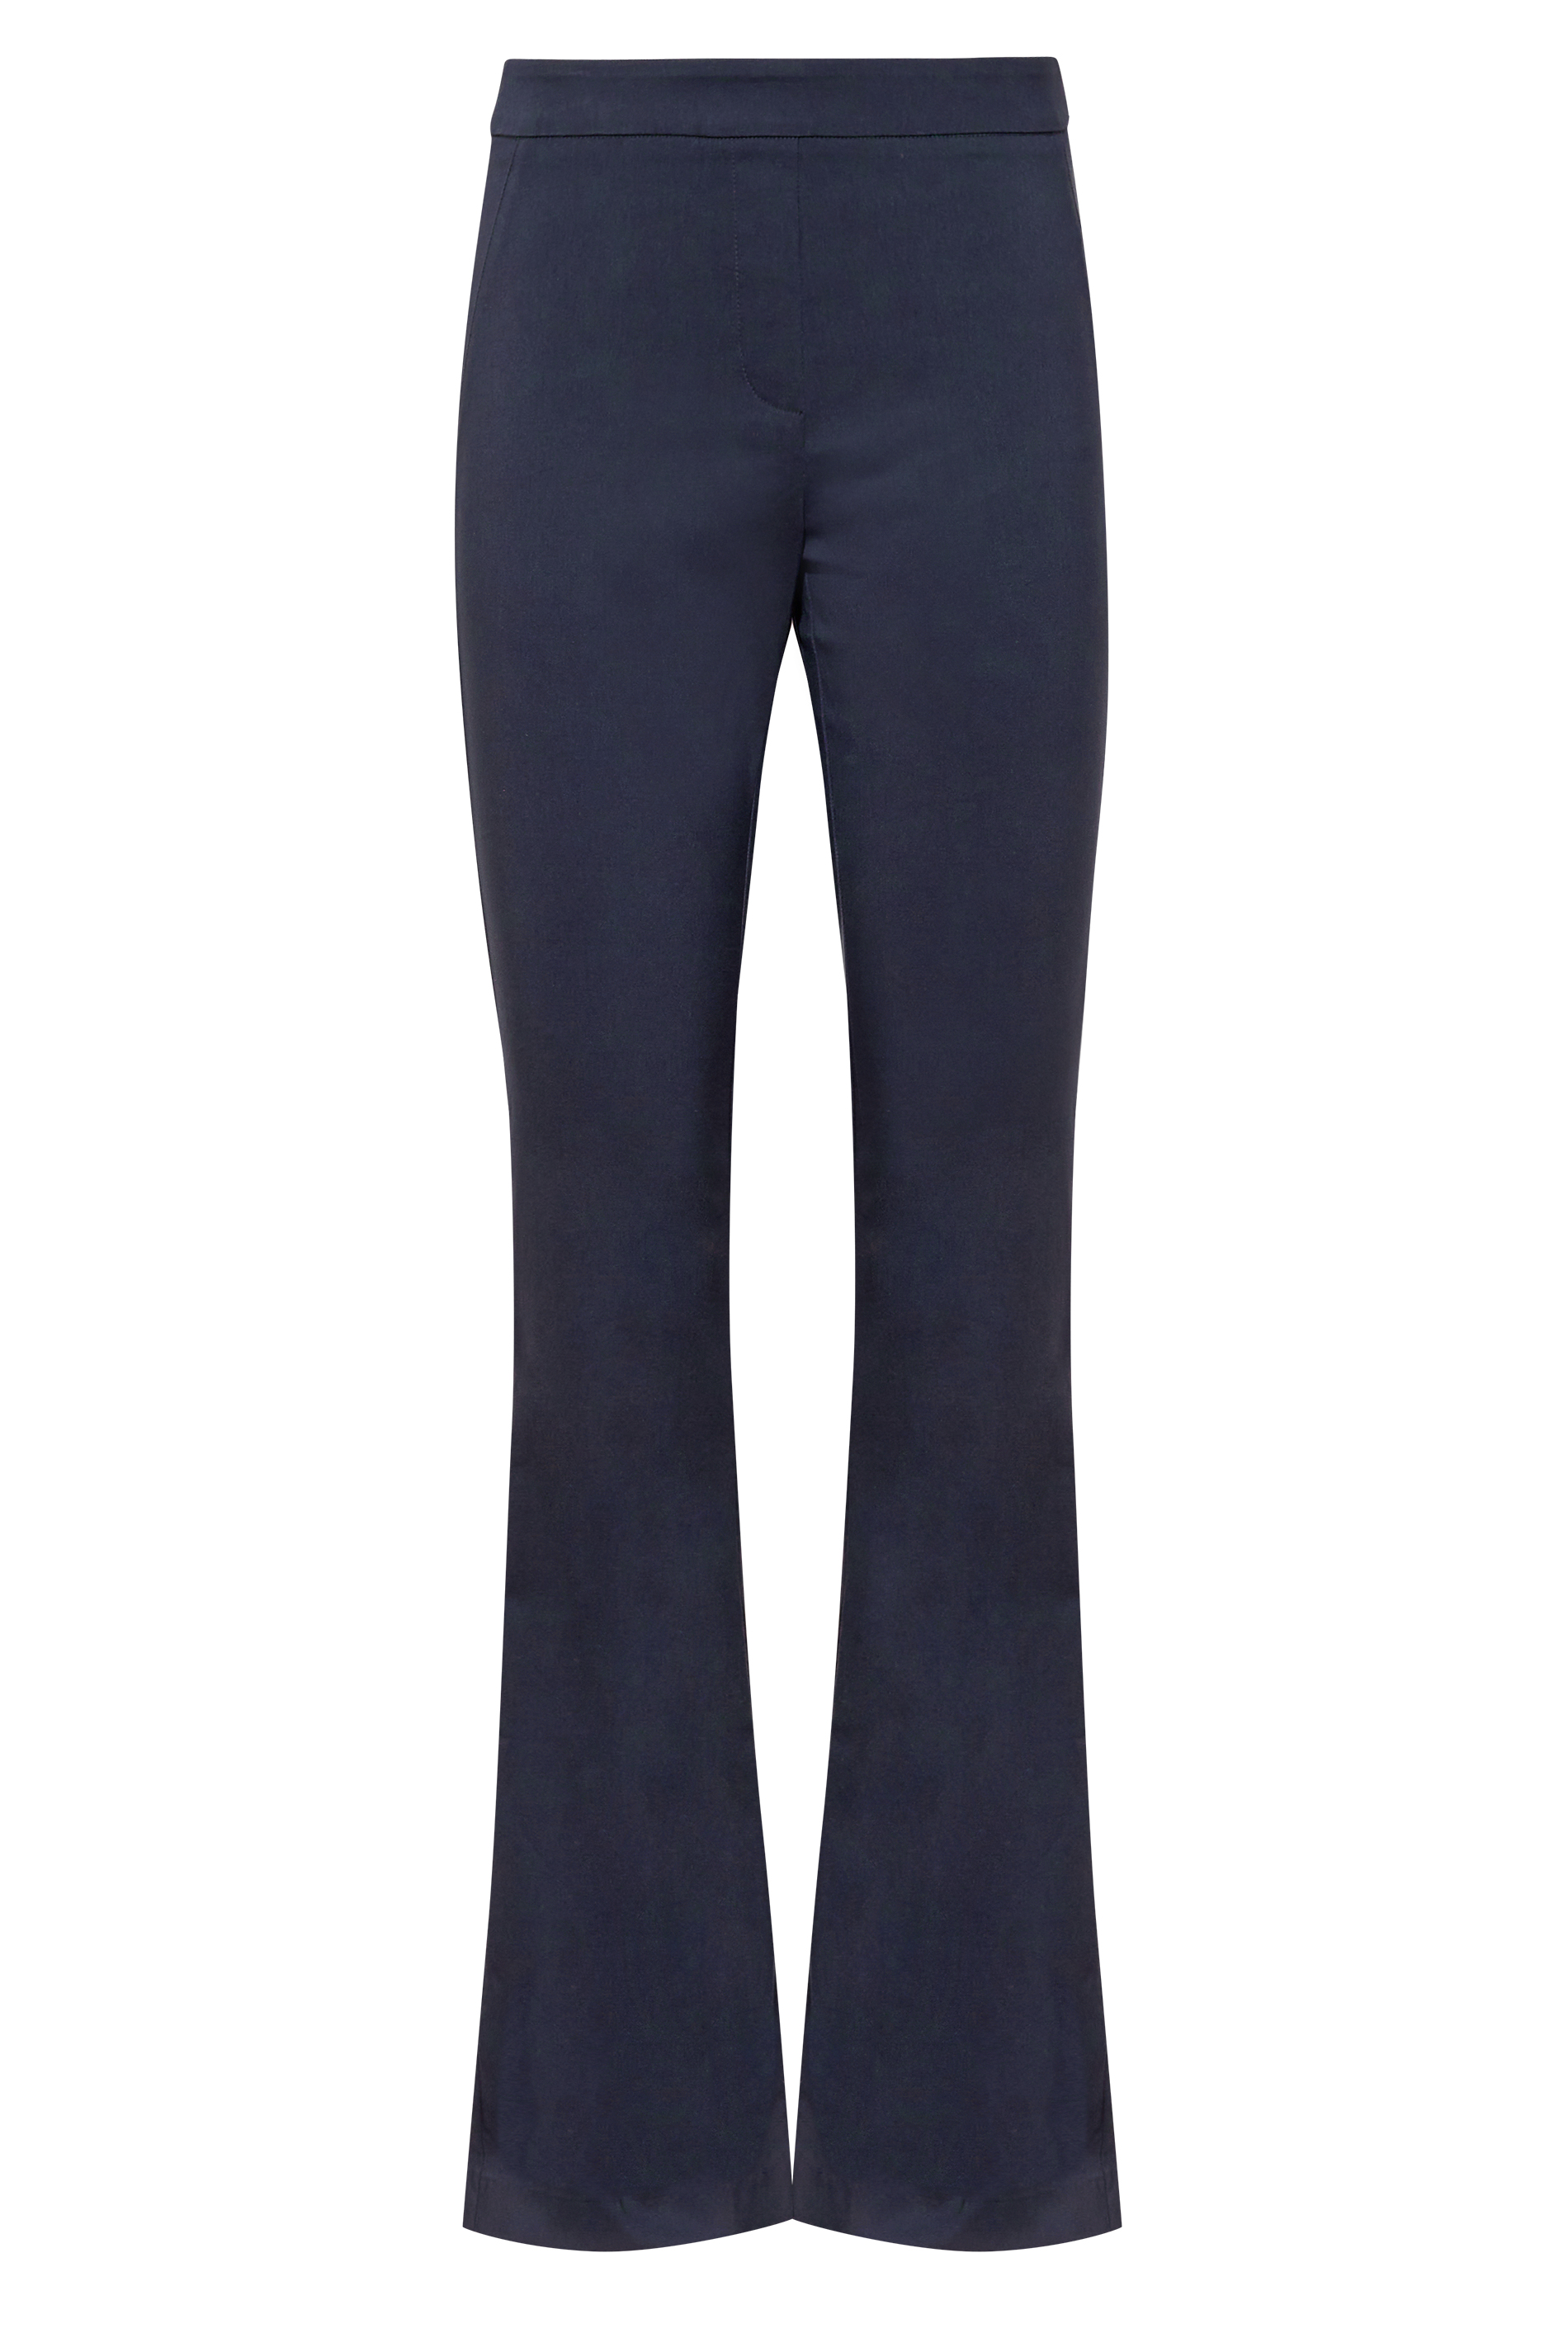 Buy Women Navy Blue Linen Regular Fit Trousers online  Looksgudin